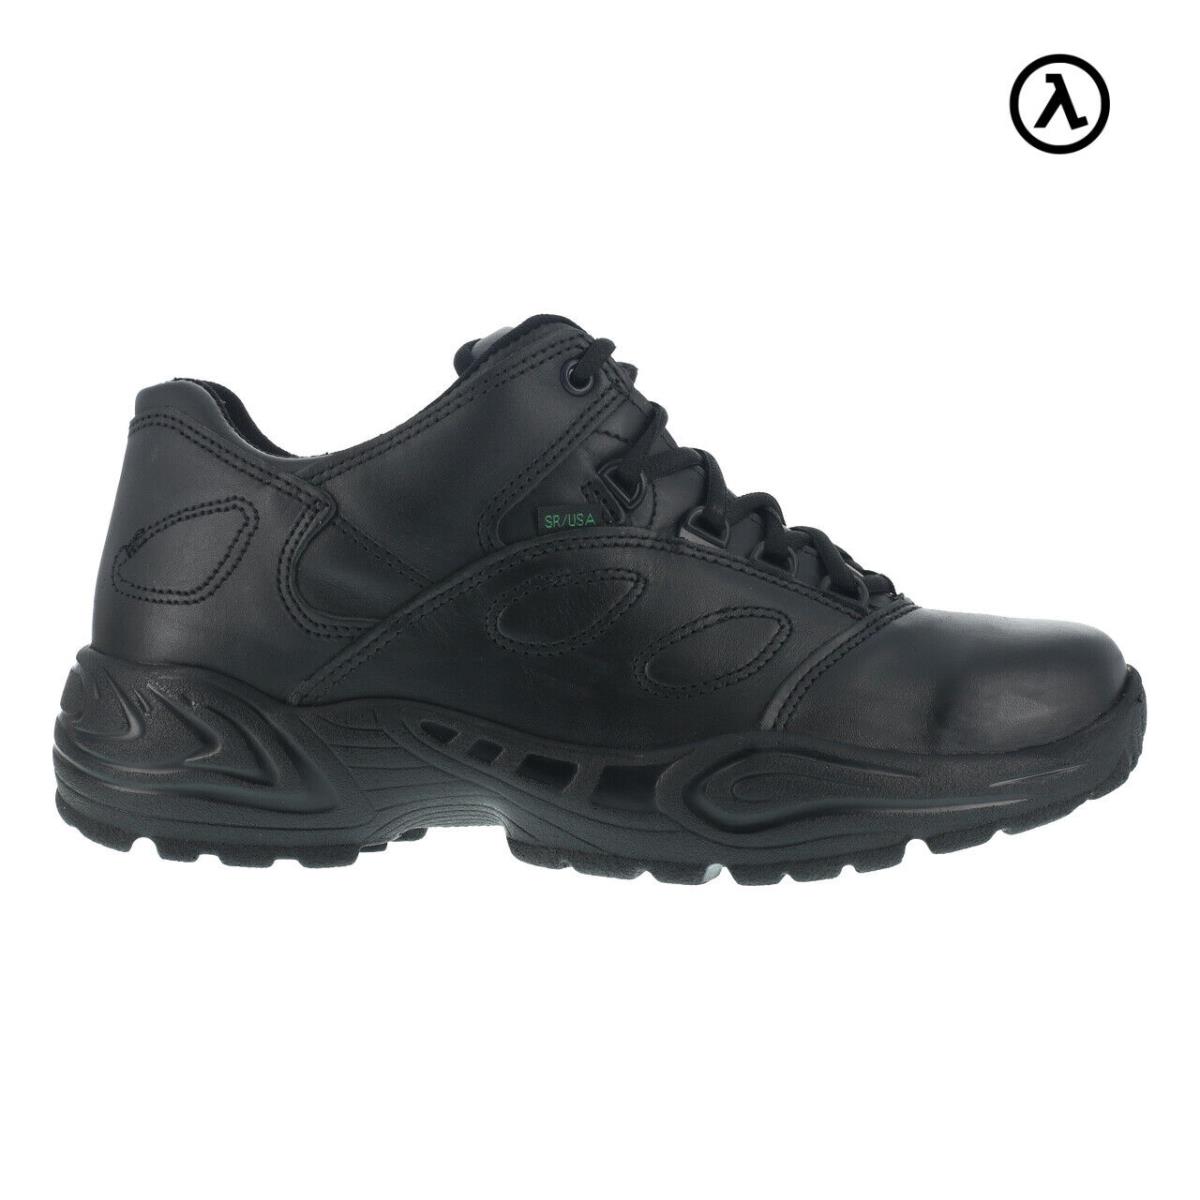 Reebok Postal Express Women`s Athletic Postal Shoe Black Boots CP810 - All Sizes